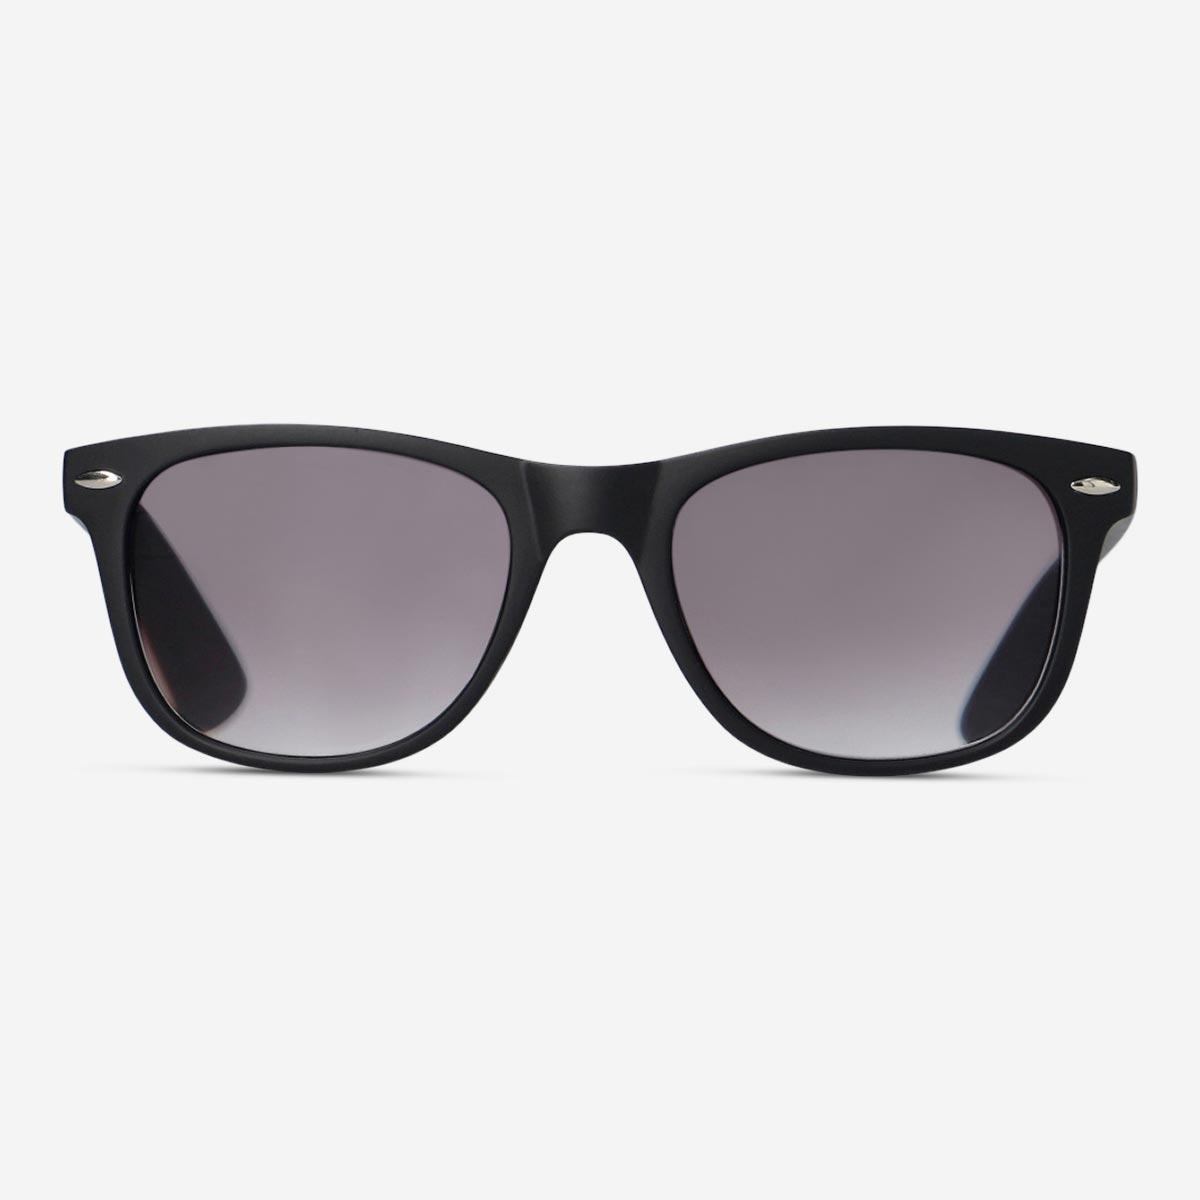 Black reading sunglasses. + 3.0